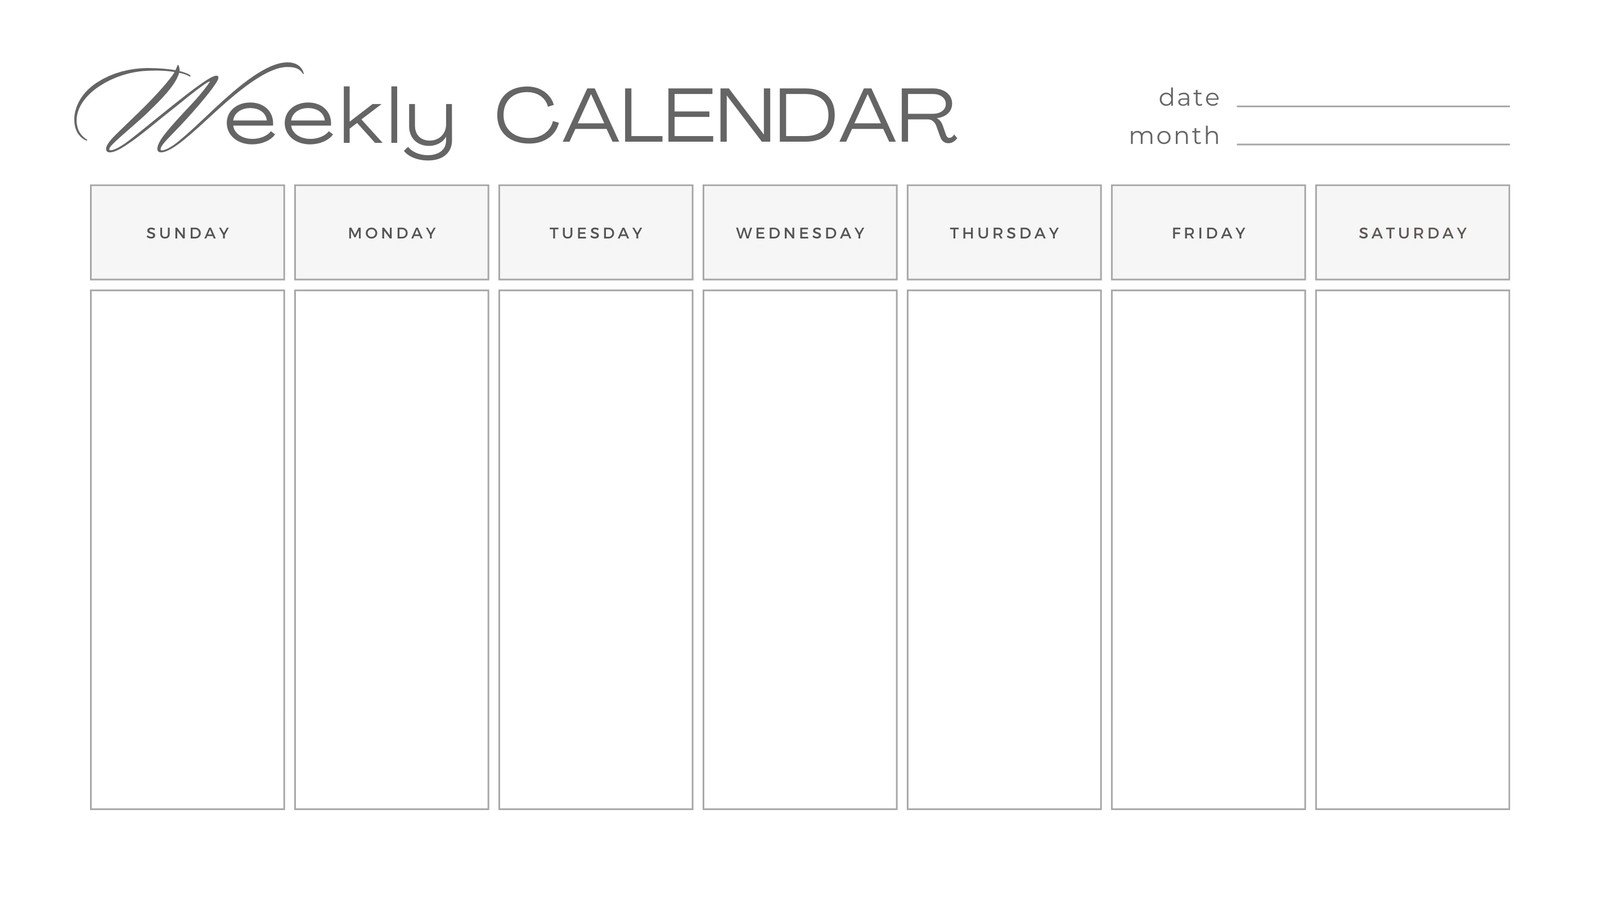 Free, printable, customizable weekly calendar templates